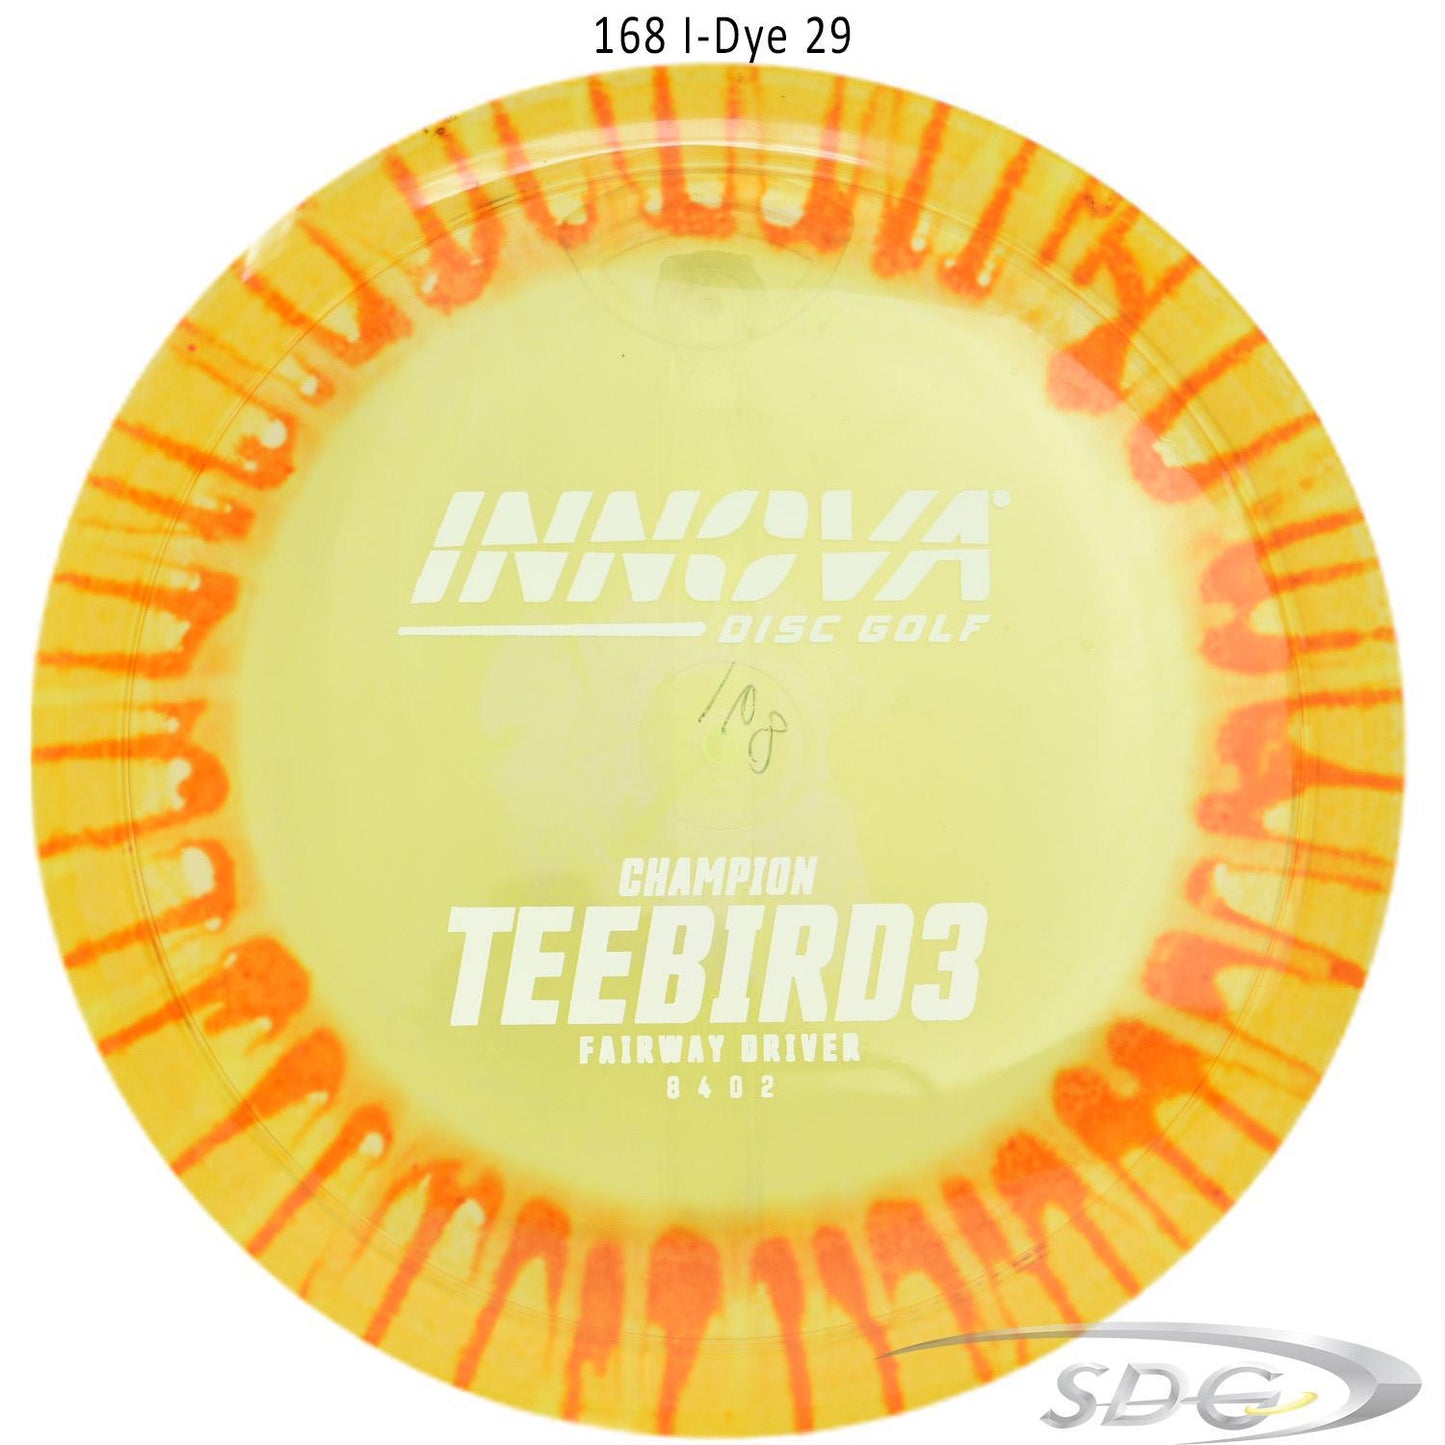 innova-champion-teebird3-i-dye-disc-golf-fairway-driver 168 I-Dye 29 